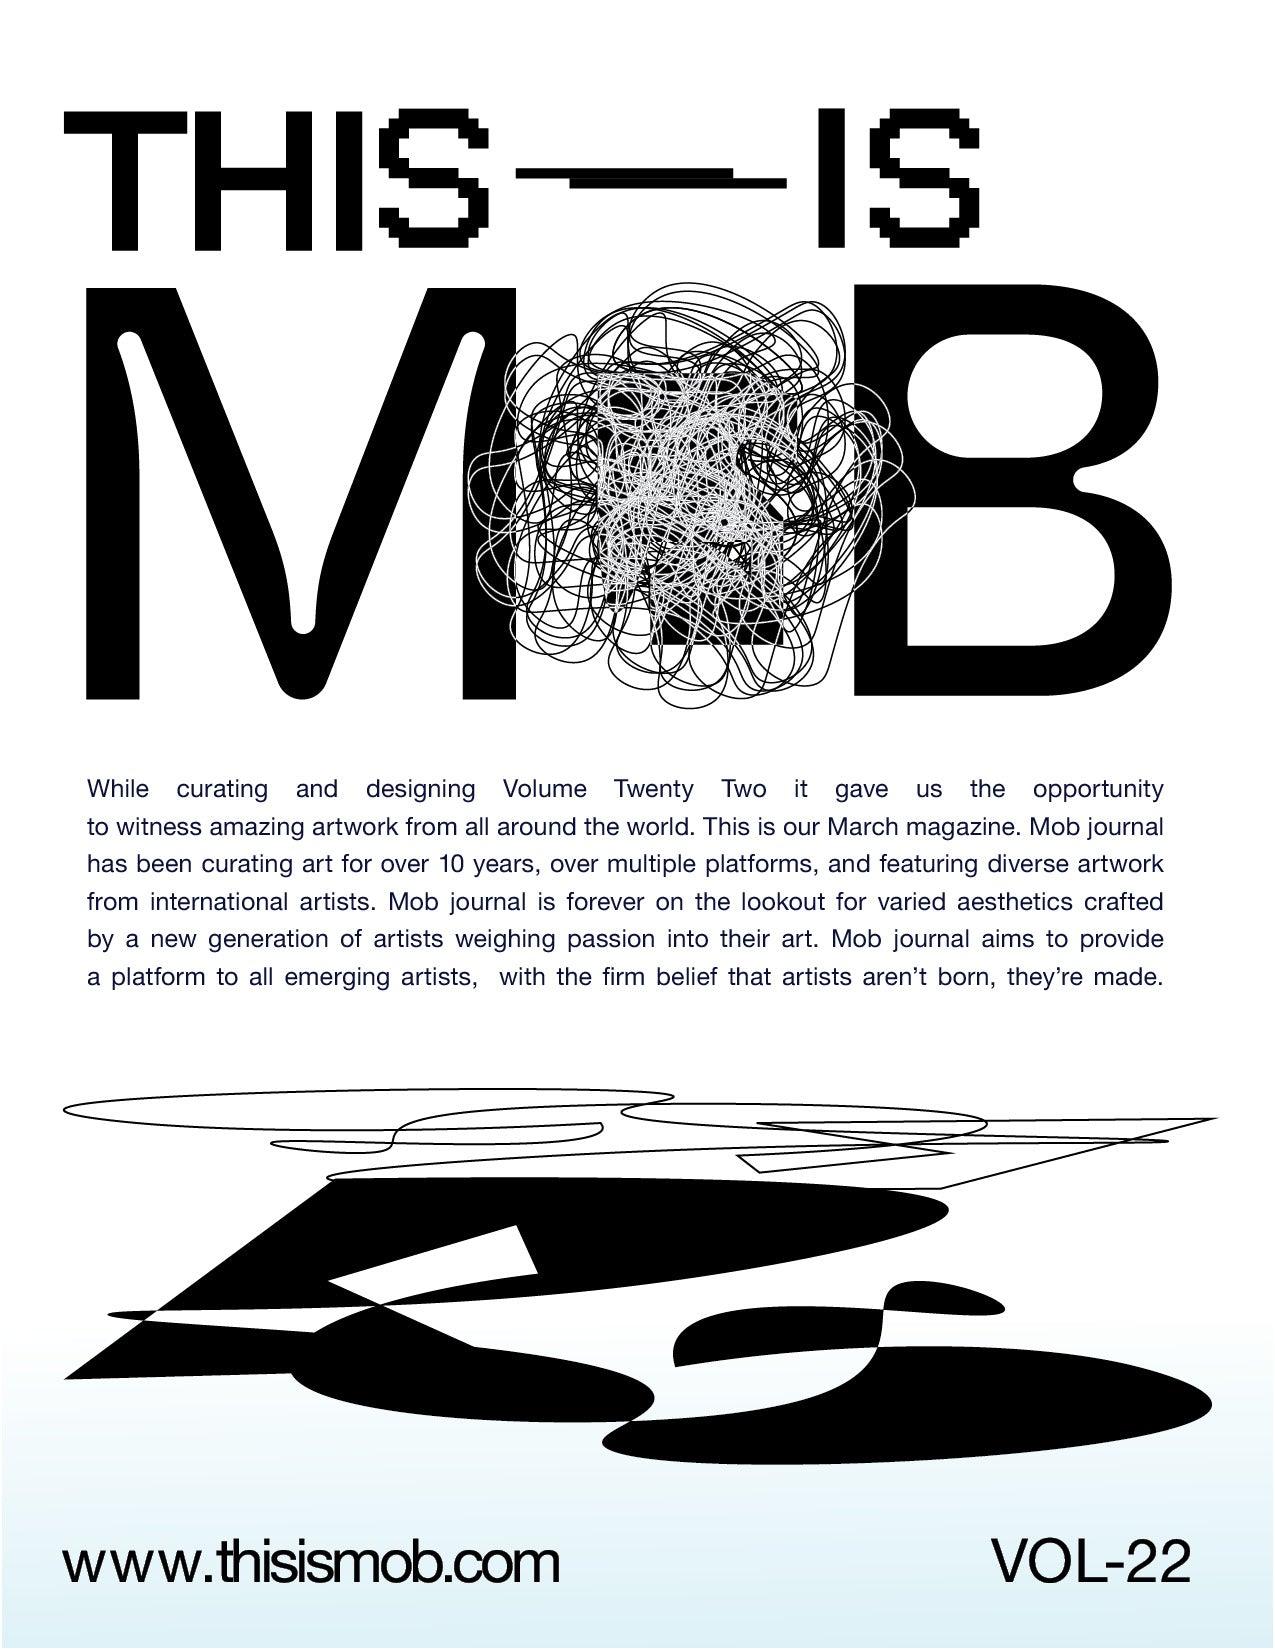 MOB JOURNAL | VOLUME TWENTY TWO | ISSUE #19 - Mob Journal